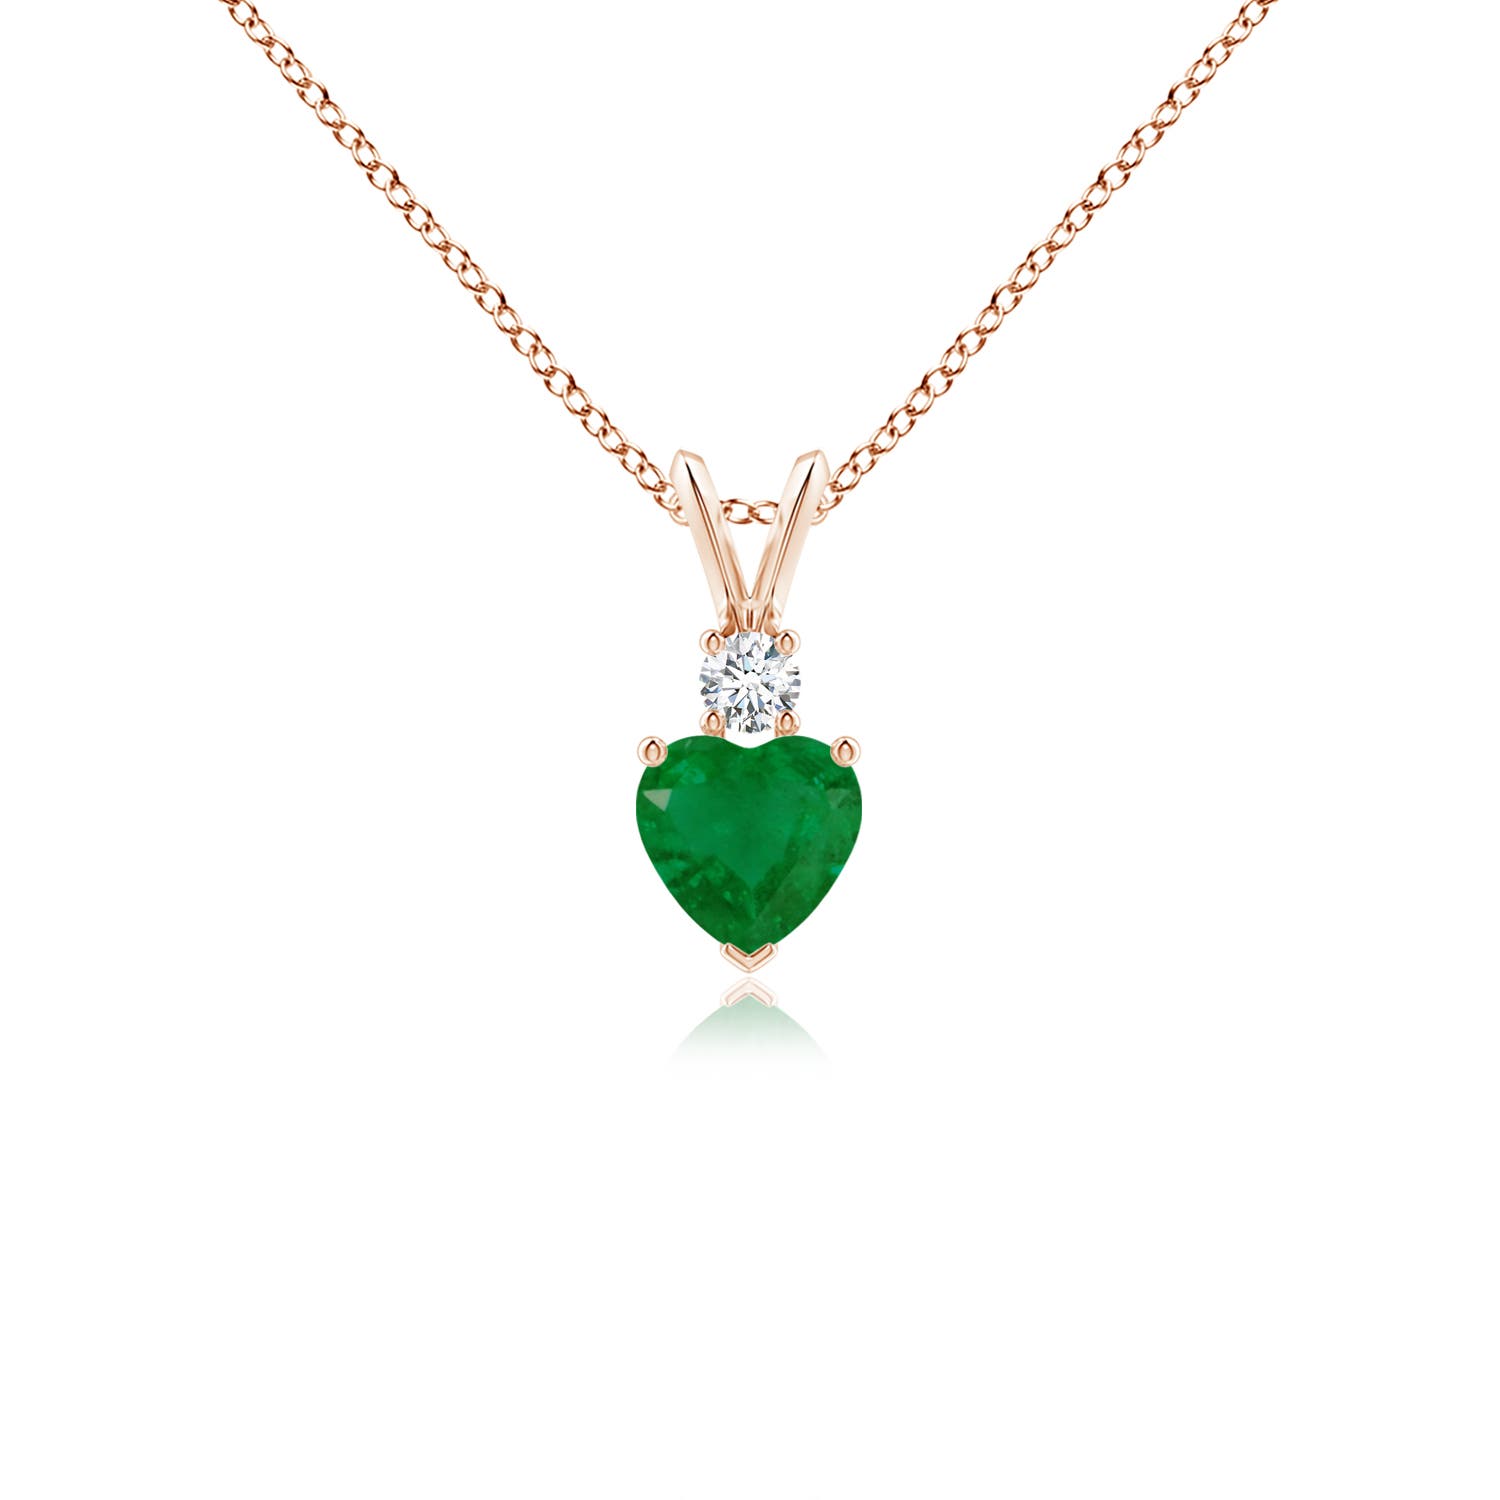 A - Emerald / 0.44 CT / 14 KT Rose Gold